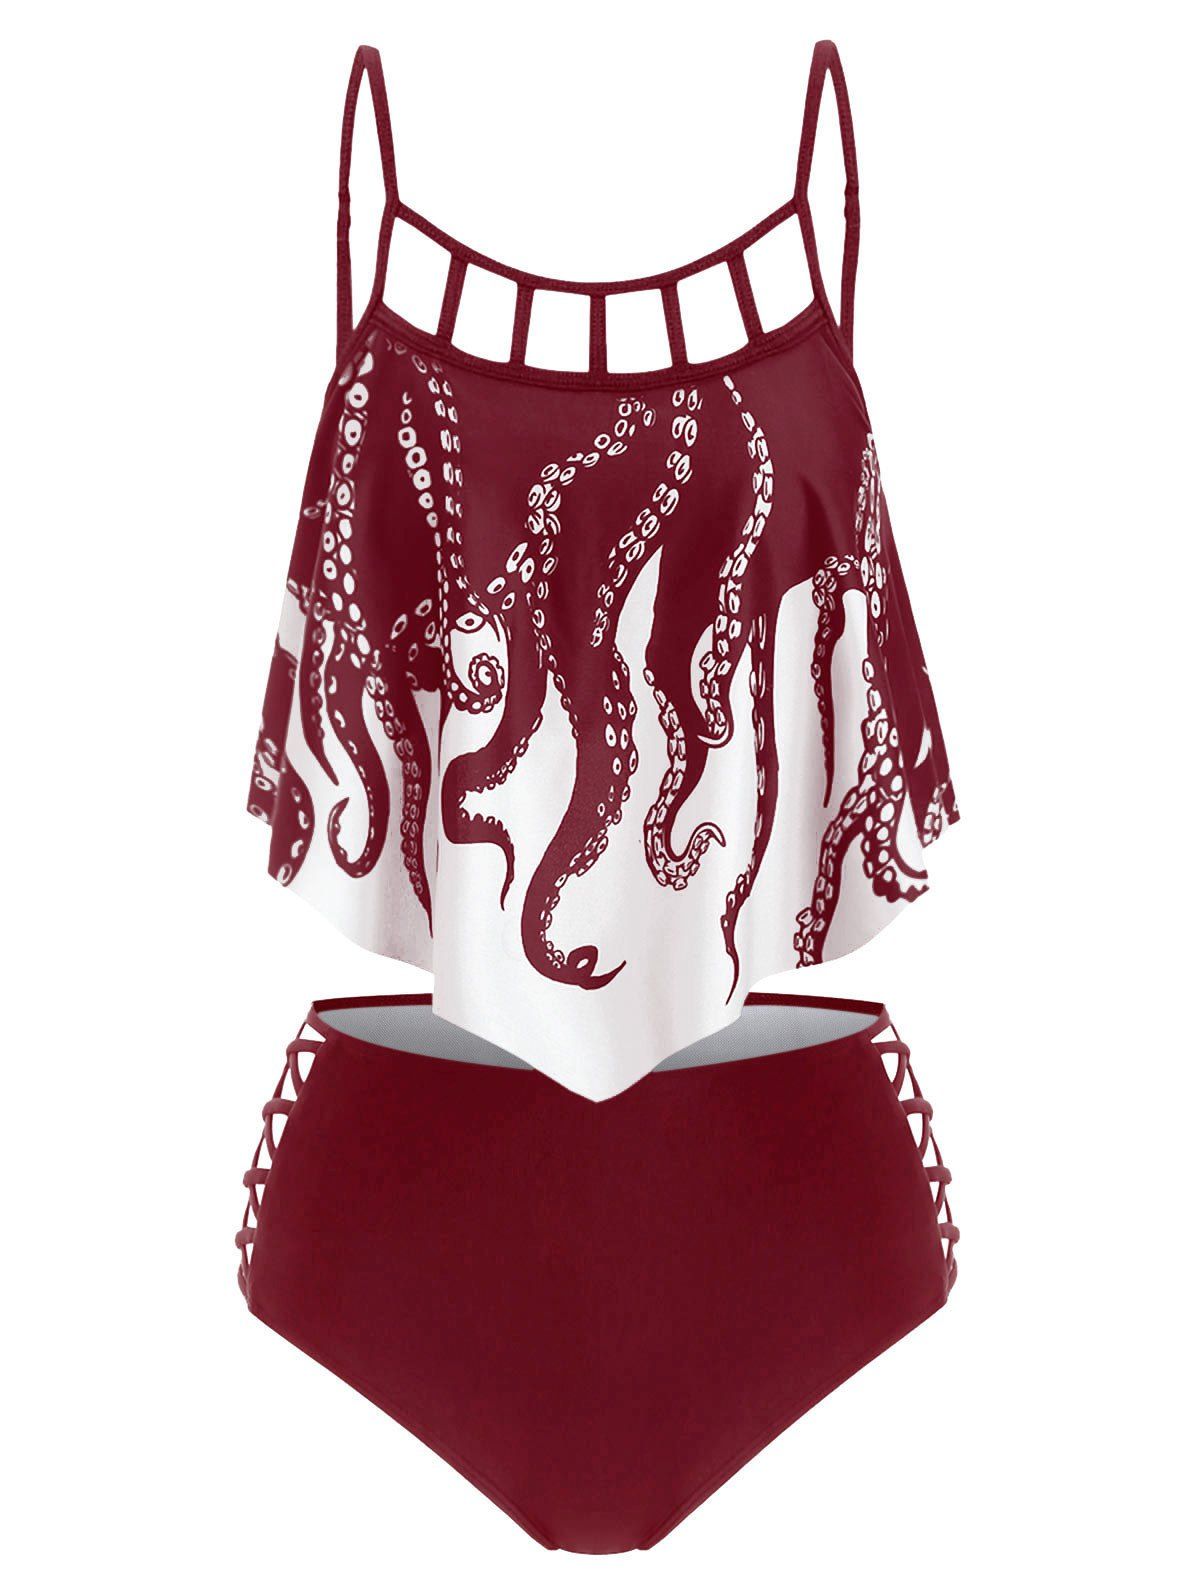 Tummy Control Swimsuit Gothic Bathing Suit Octopus Print Cut Out Crisscross Summer Beach Tankini Swimwear - RED WINE L